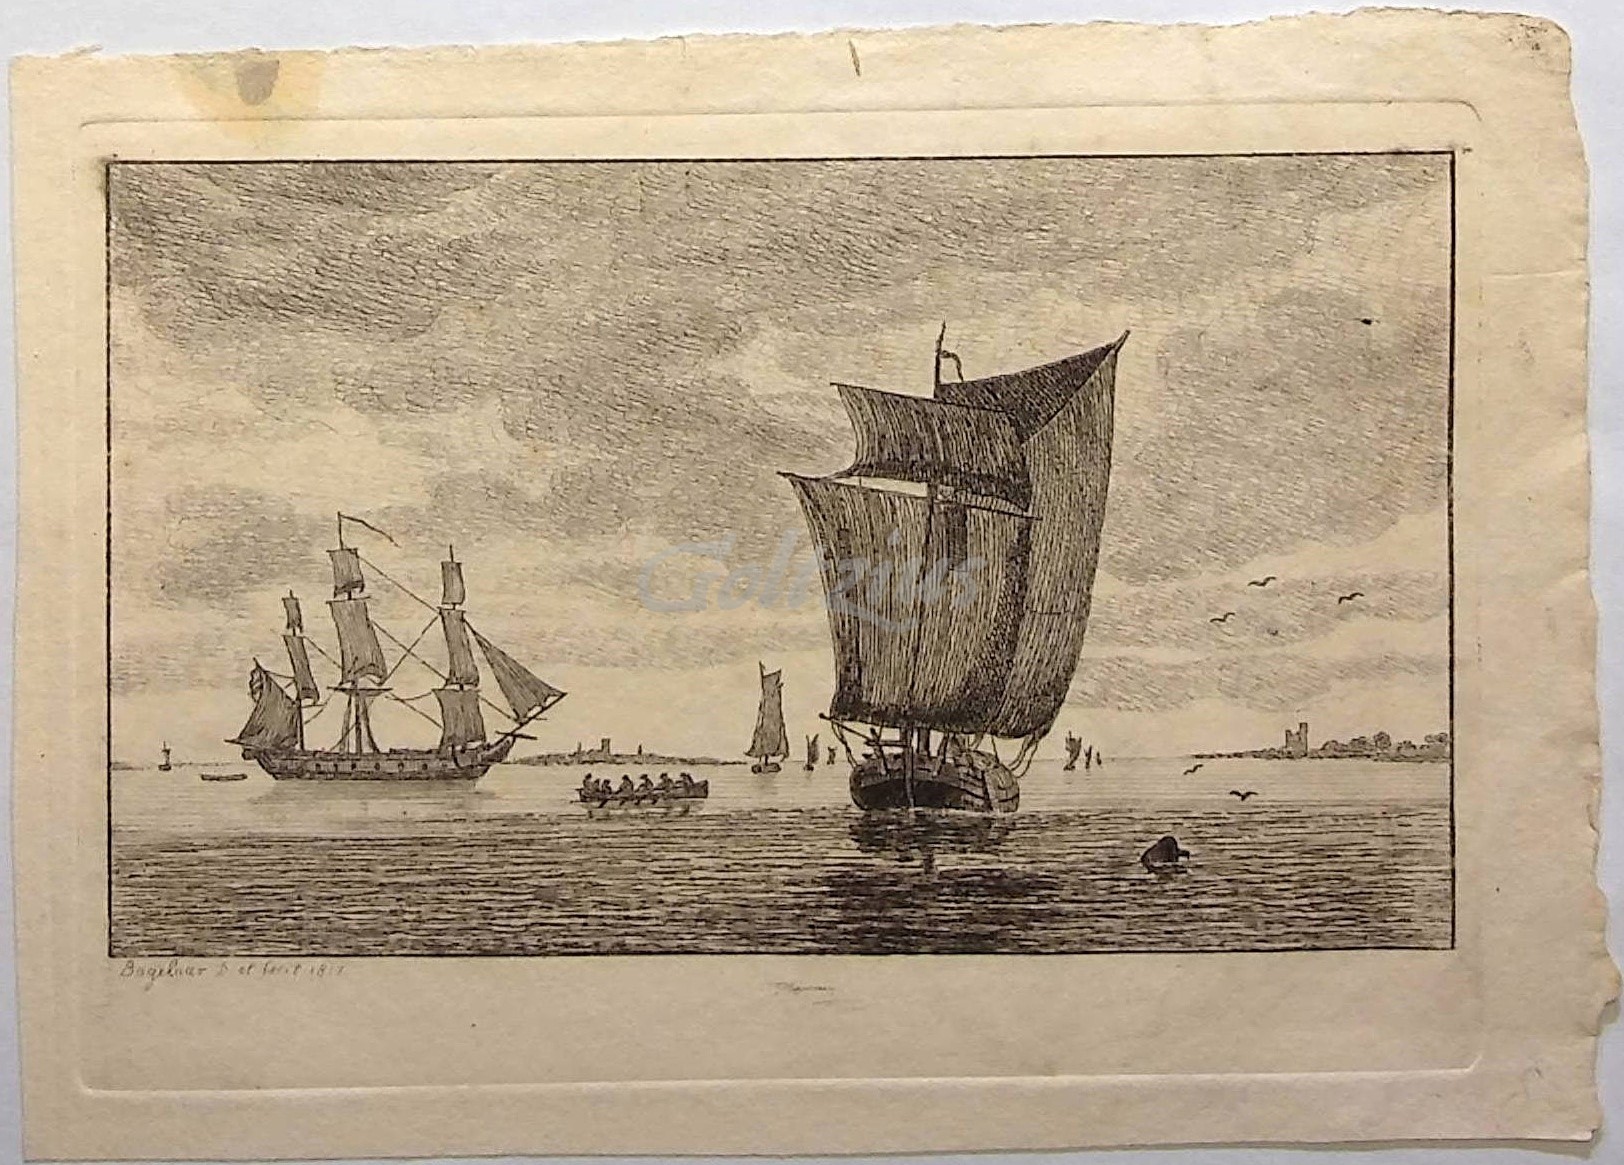 BAGELAAR, ERNST WILLEM JAN (1775-1837), Seascape with sailship and warship